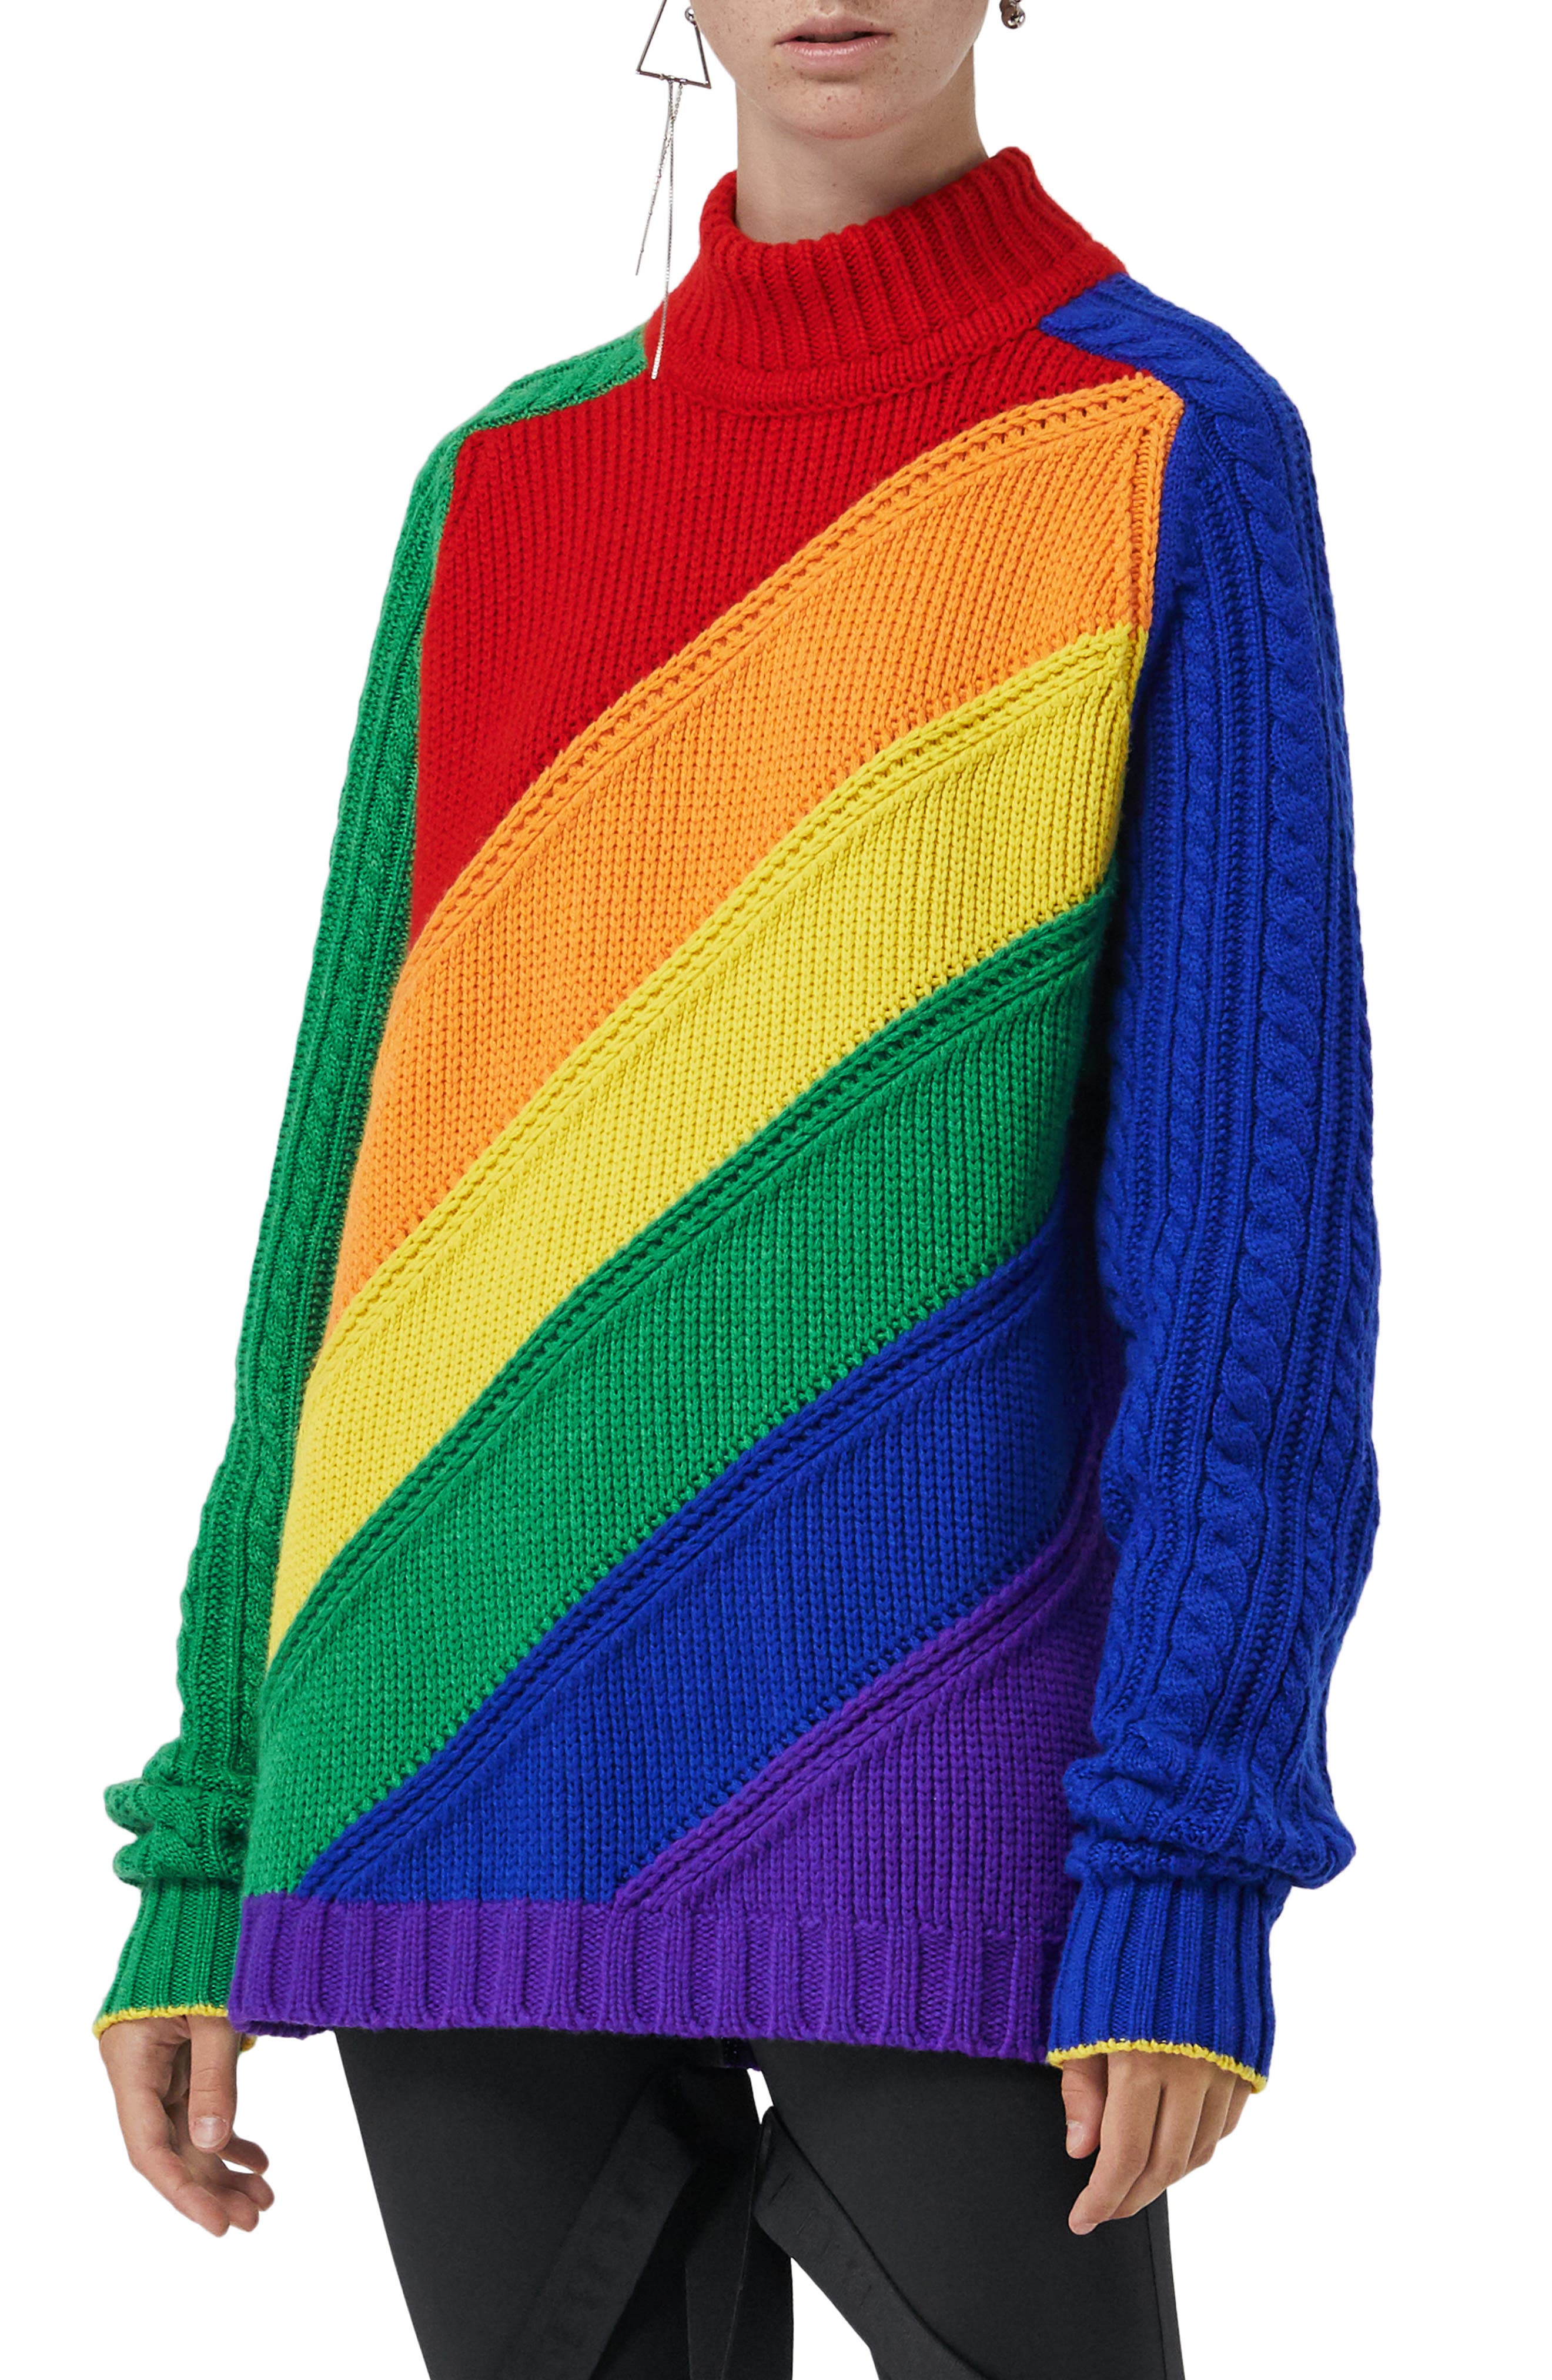 burberry rainbow jumper